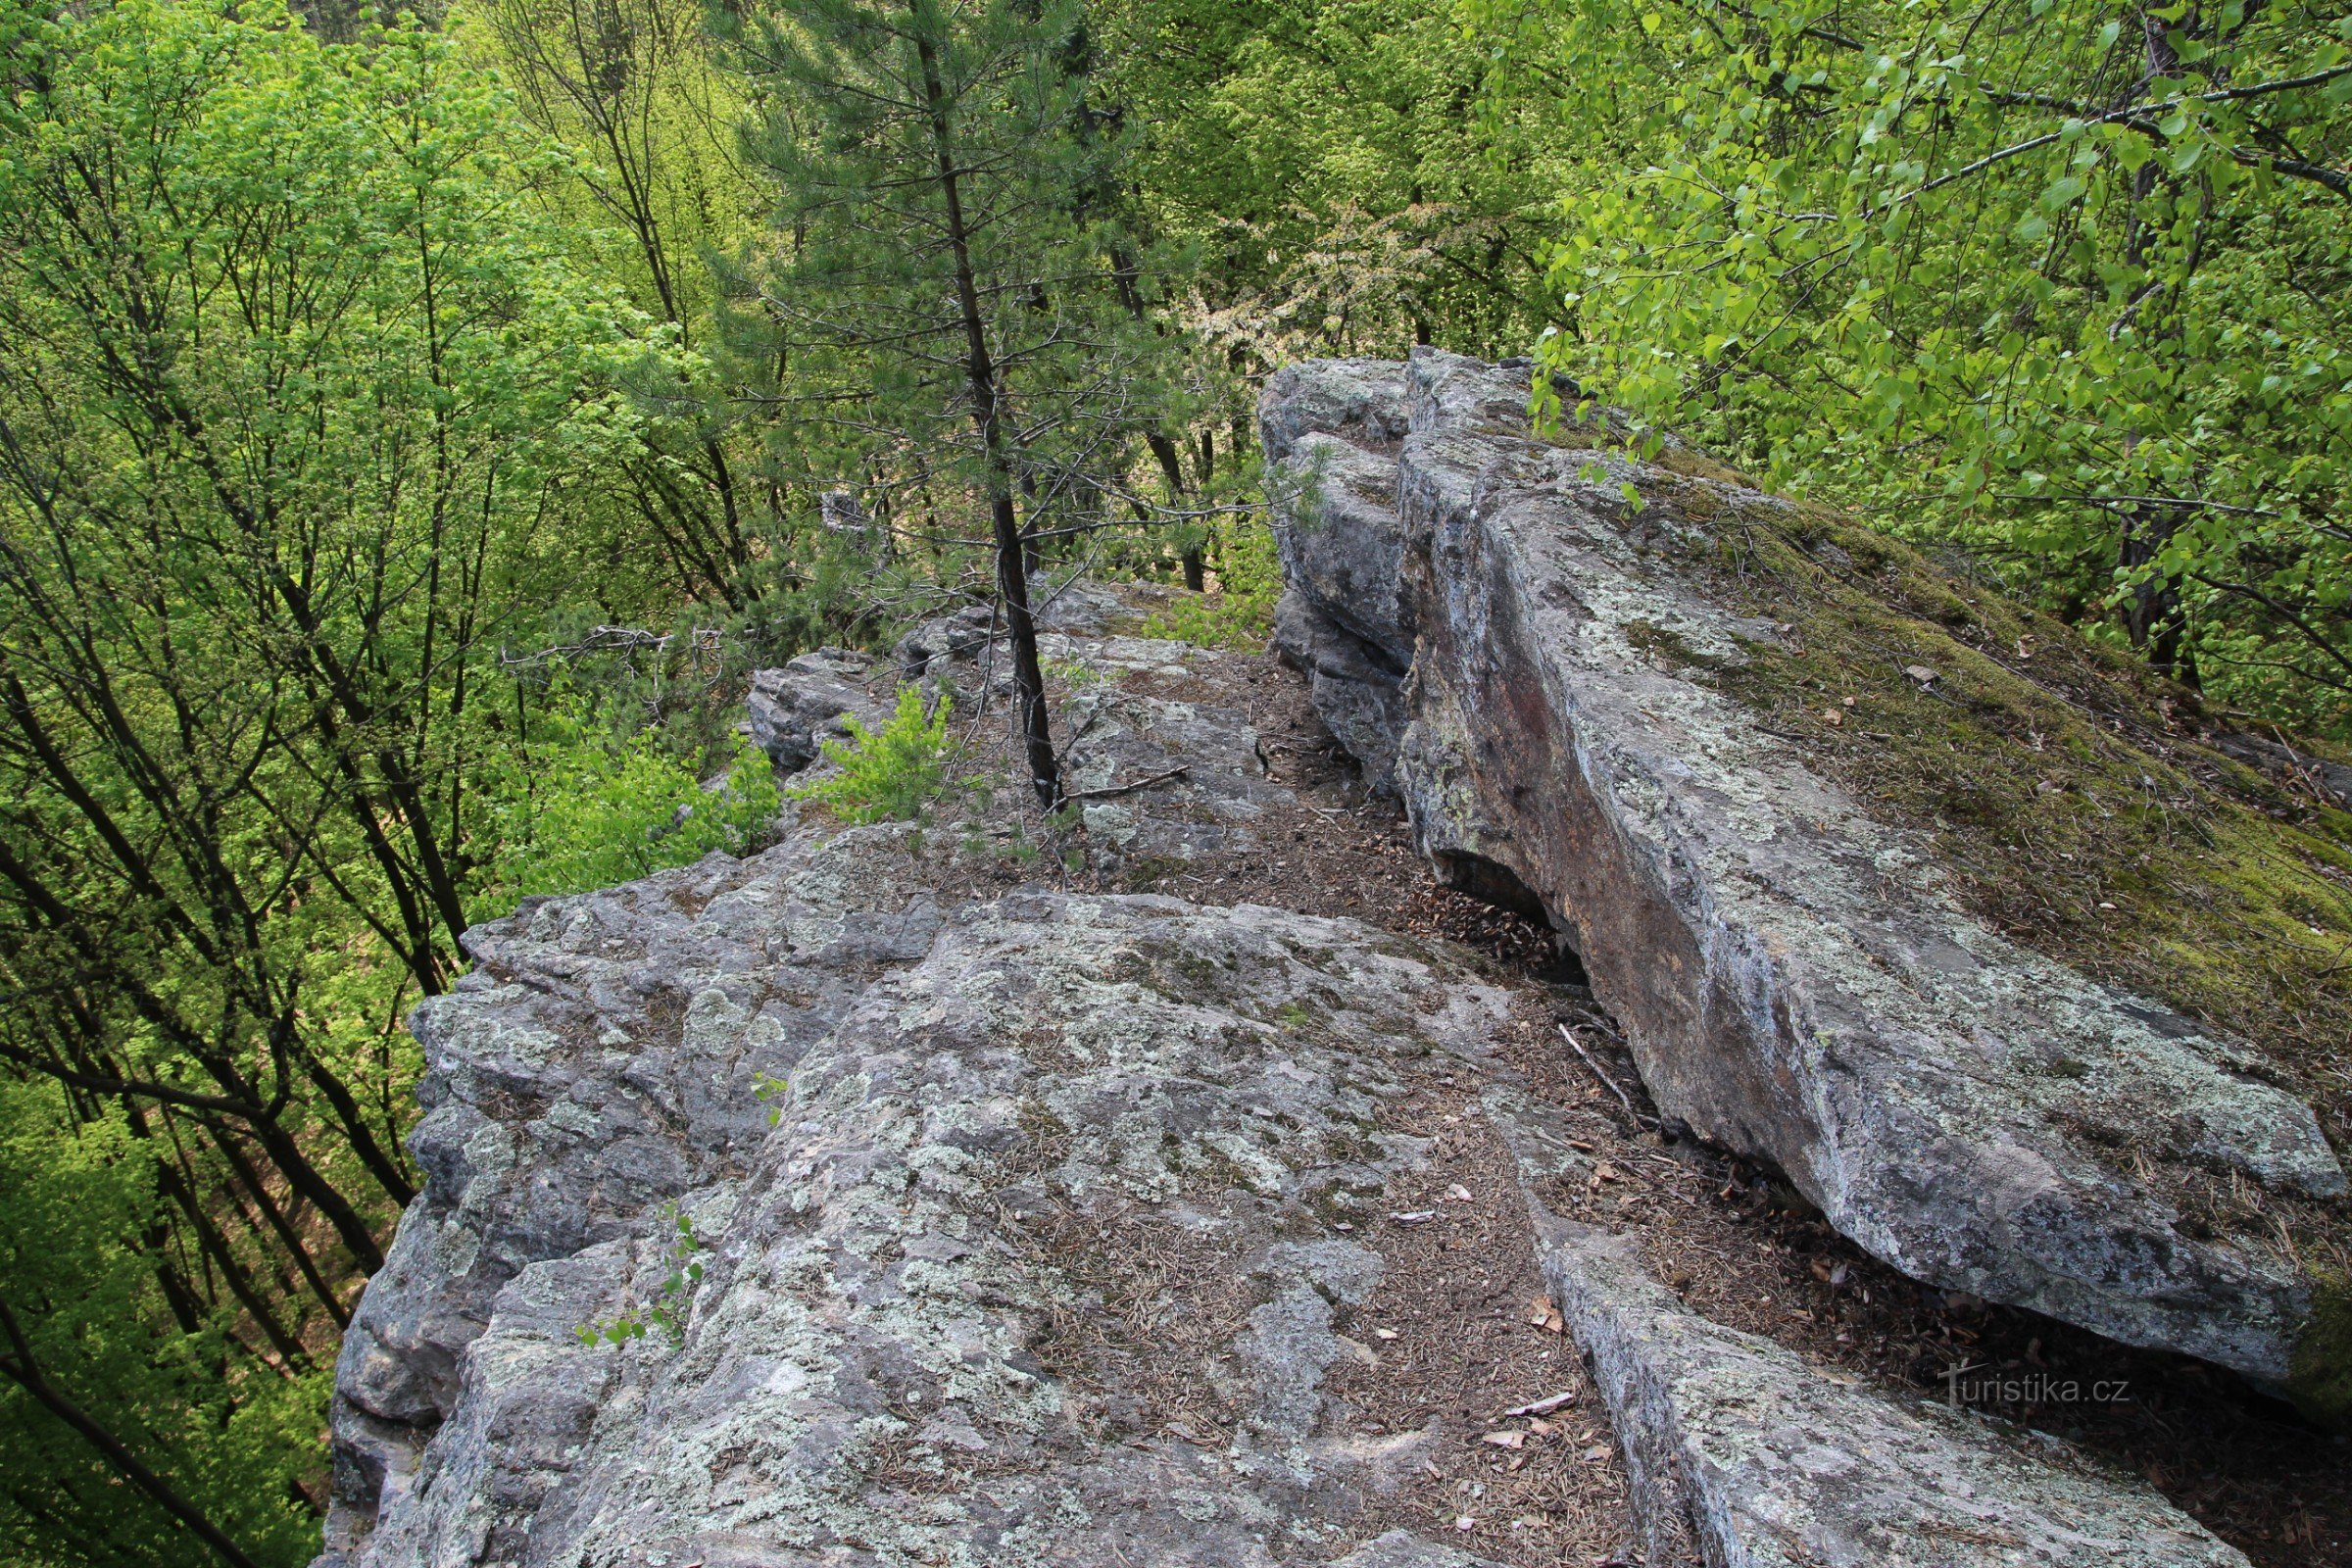 On the upper edge of the rock ridge